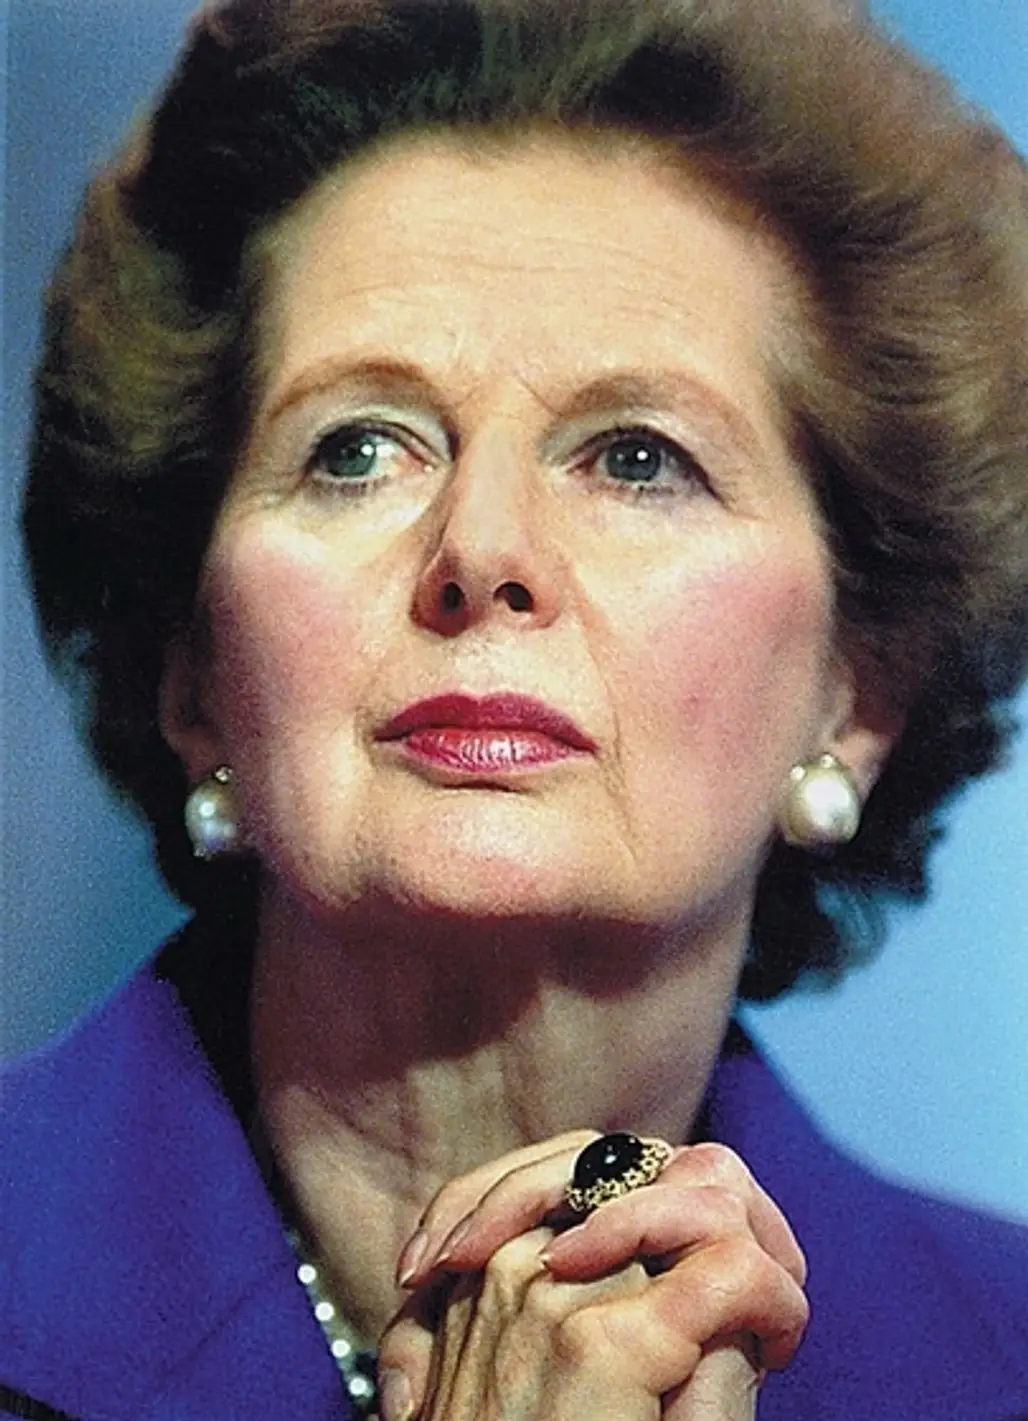 Margaret Thatcher, Former Conservative Prime Minister of the UK